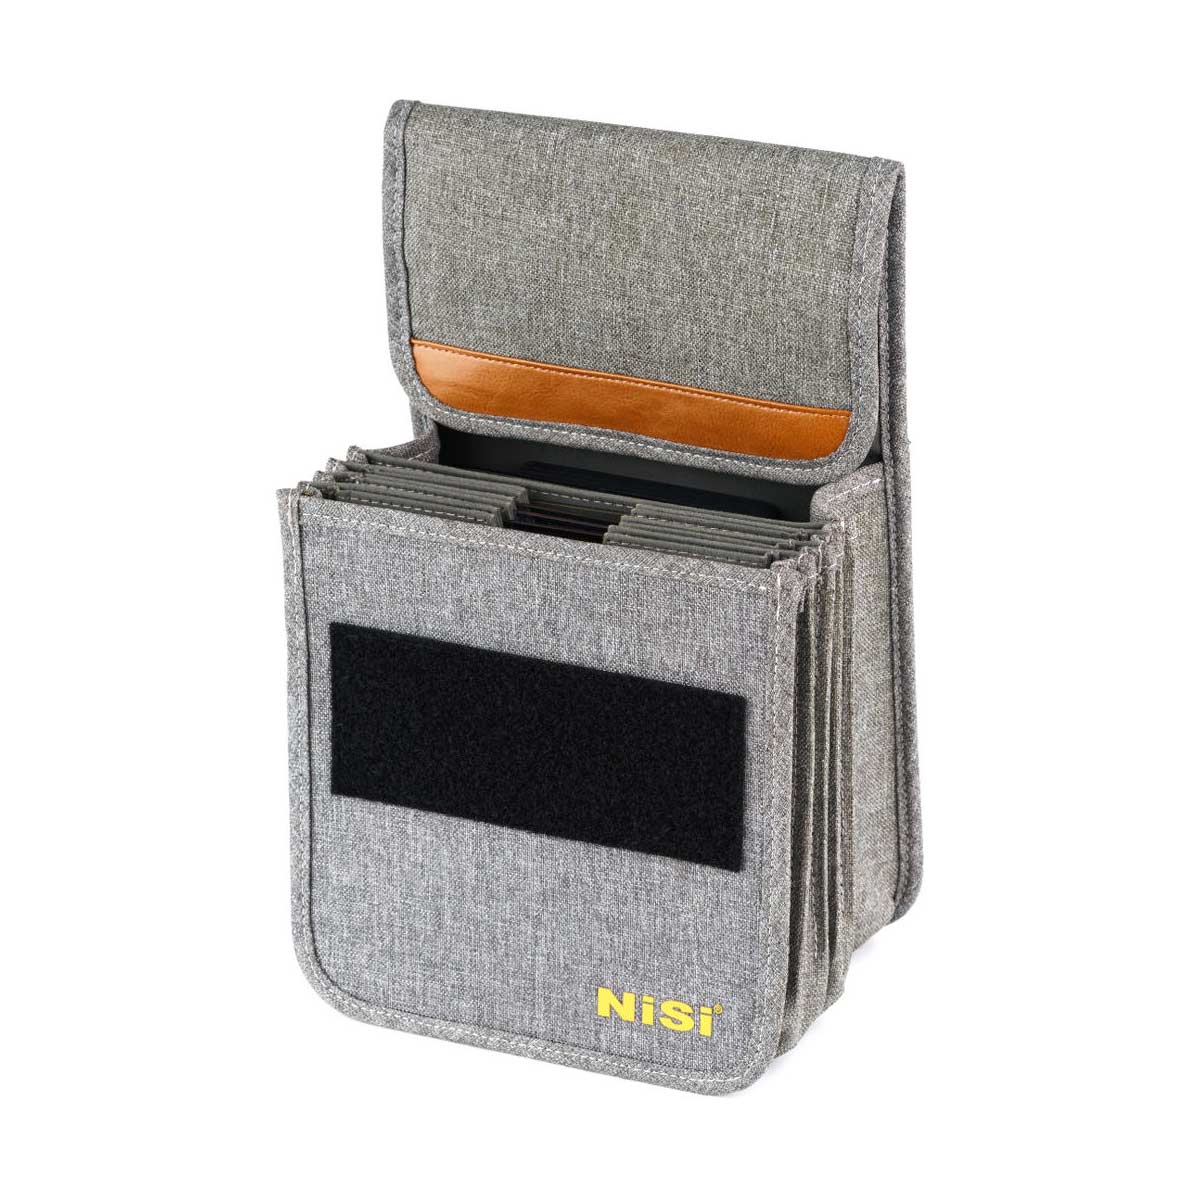 NiSi 150mm Filter System Advance Kit Generation II